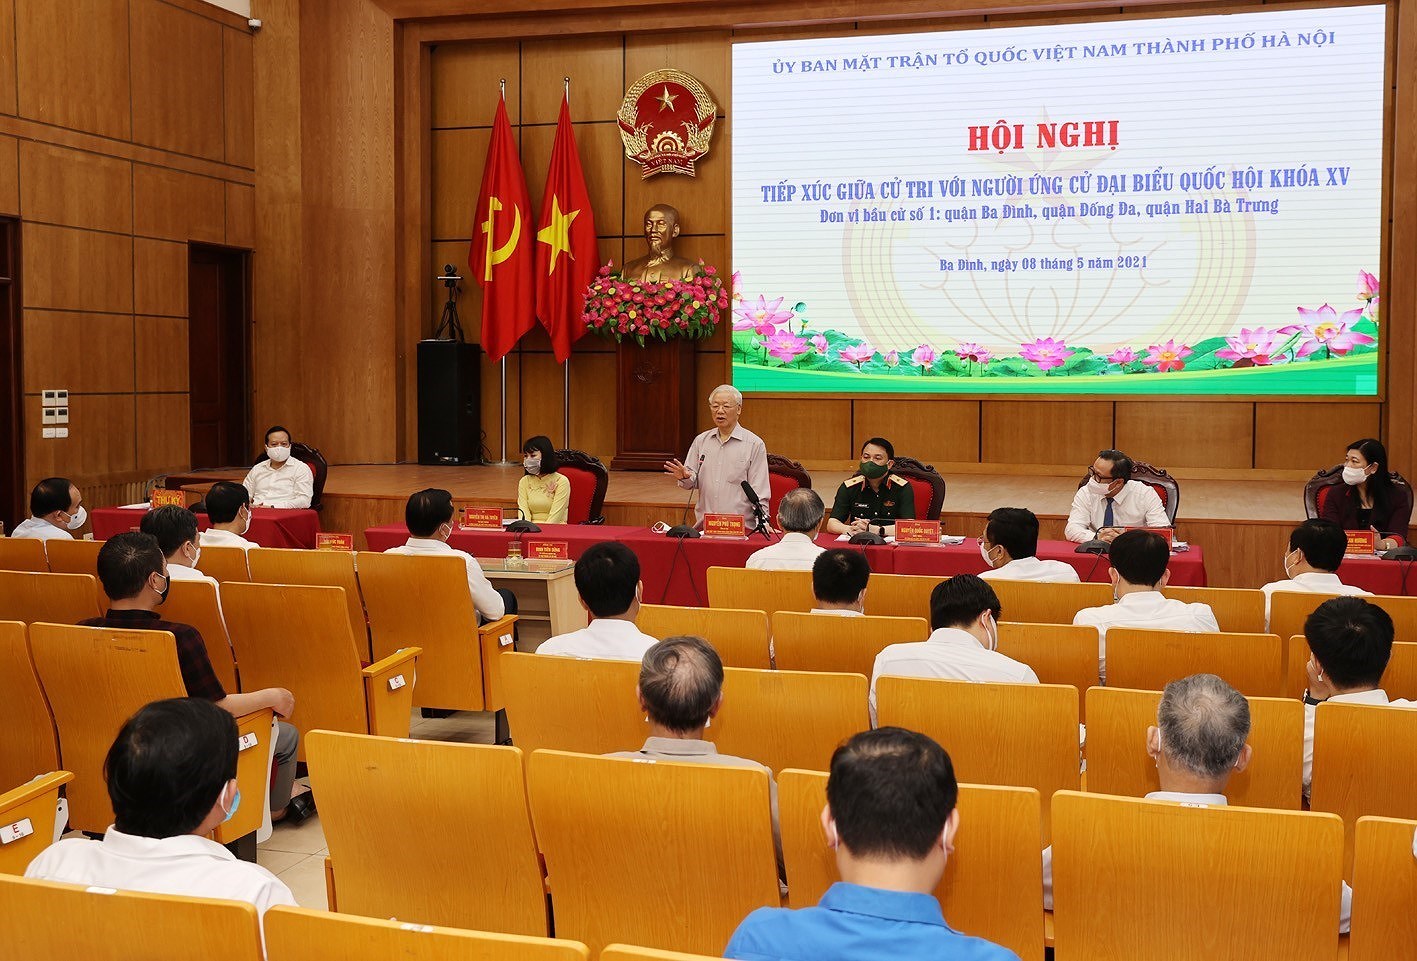 Hanoi: Reunion entre votantes y candidatos a diputados del Parlamento de Vietnam hinh anh 2